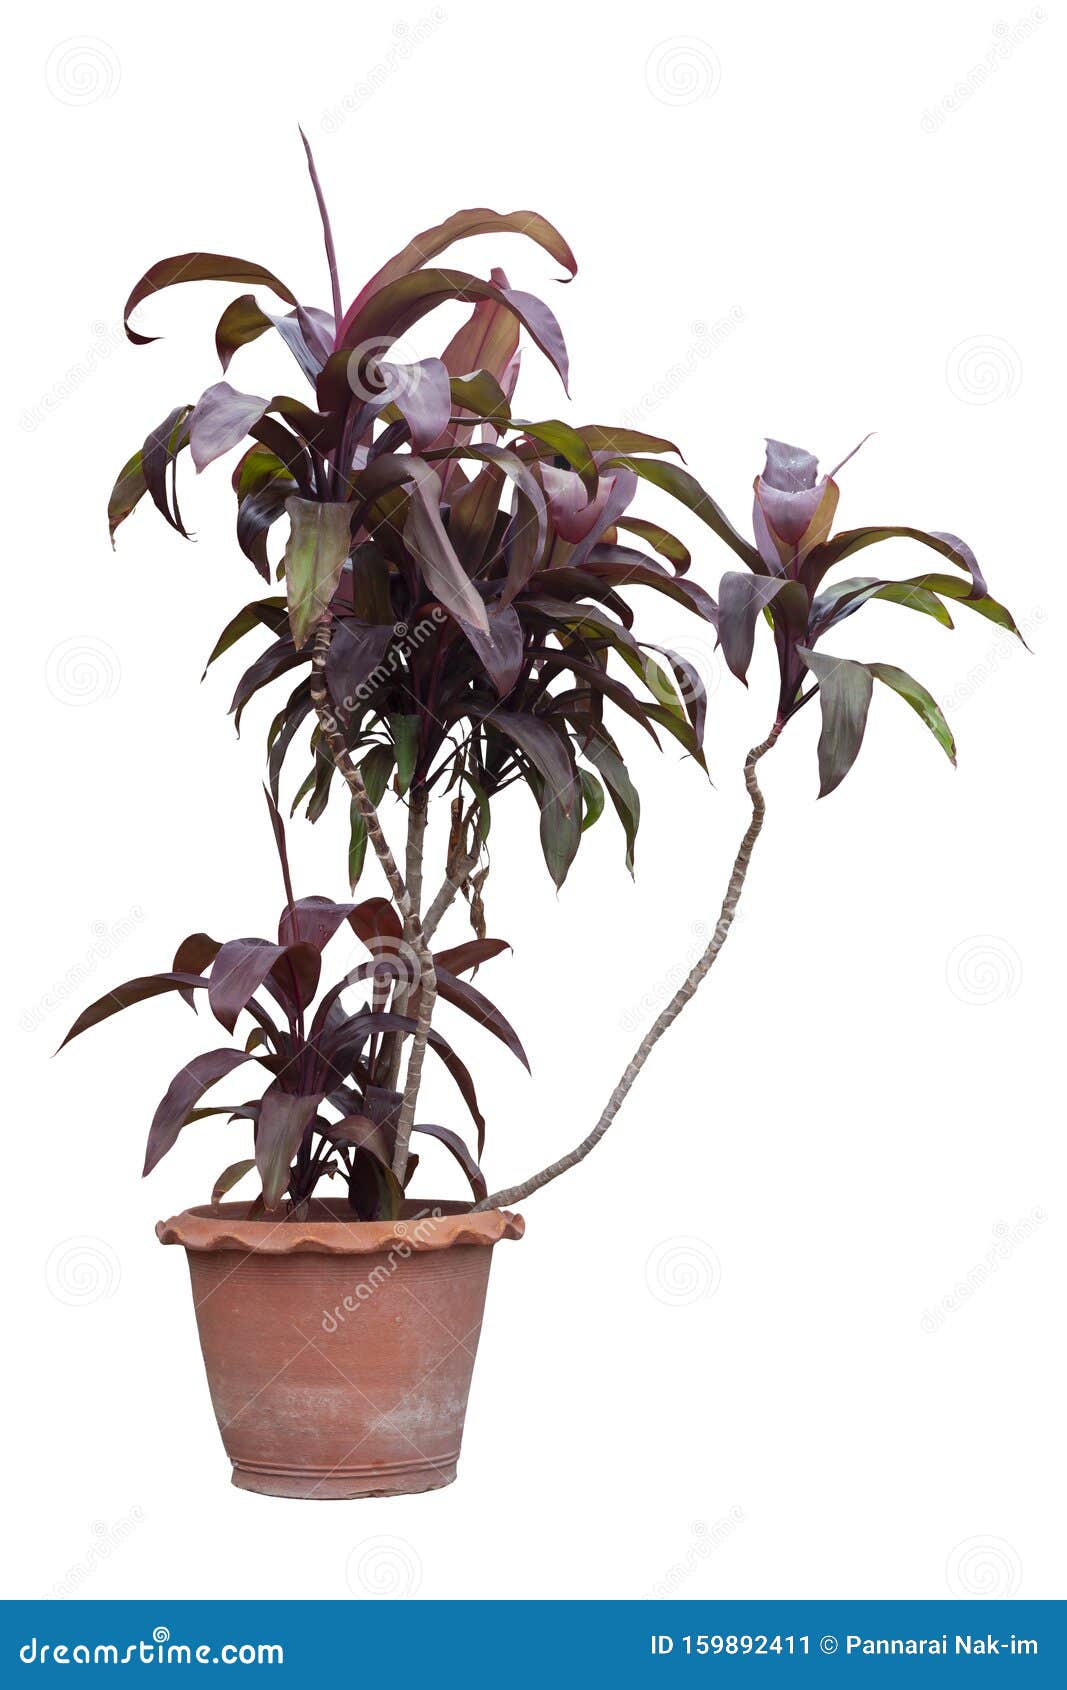 cordyline fruticosa or ti plant in brown pot  on white background.